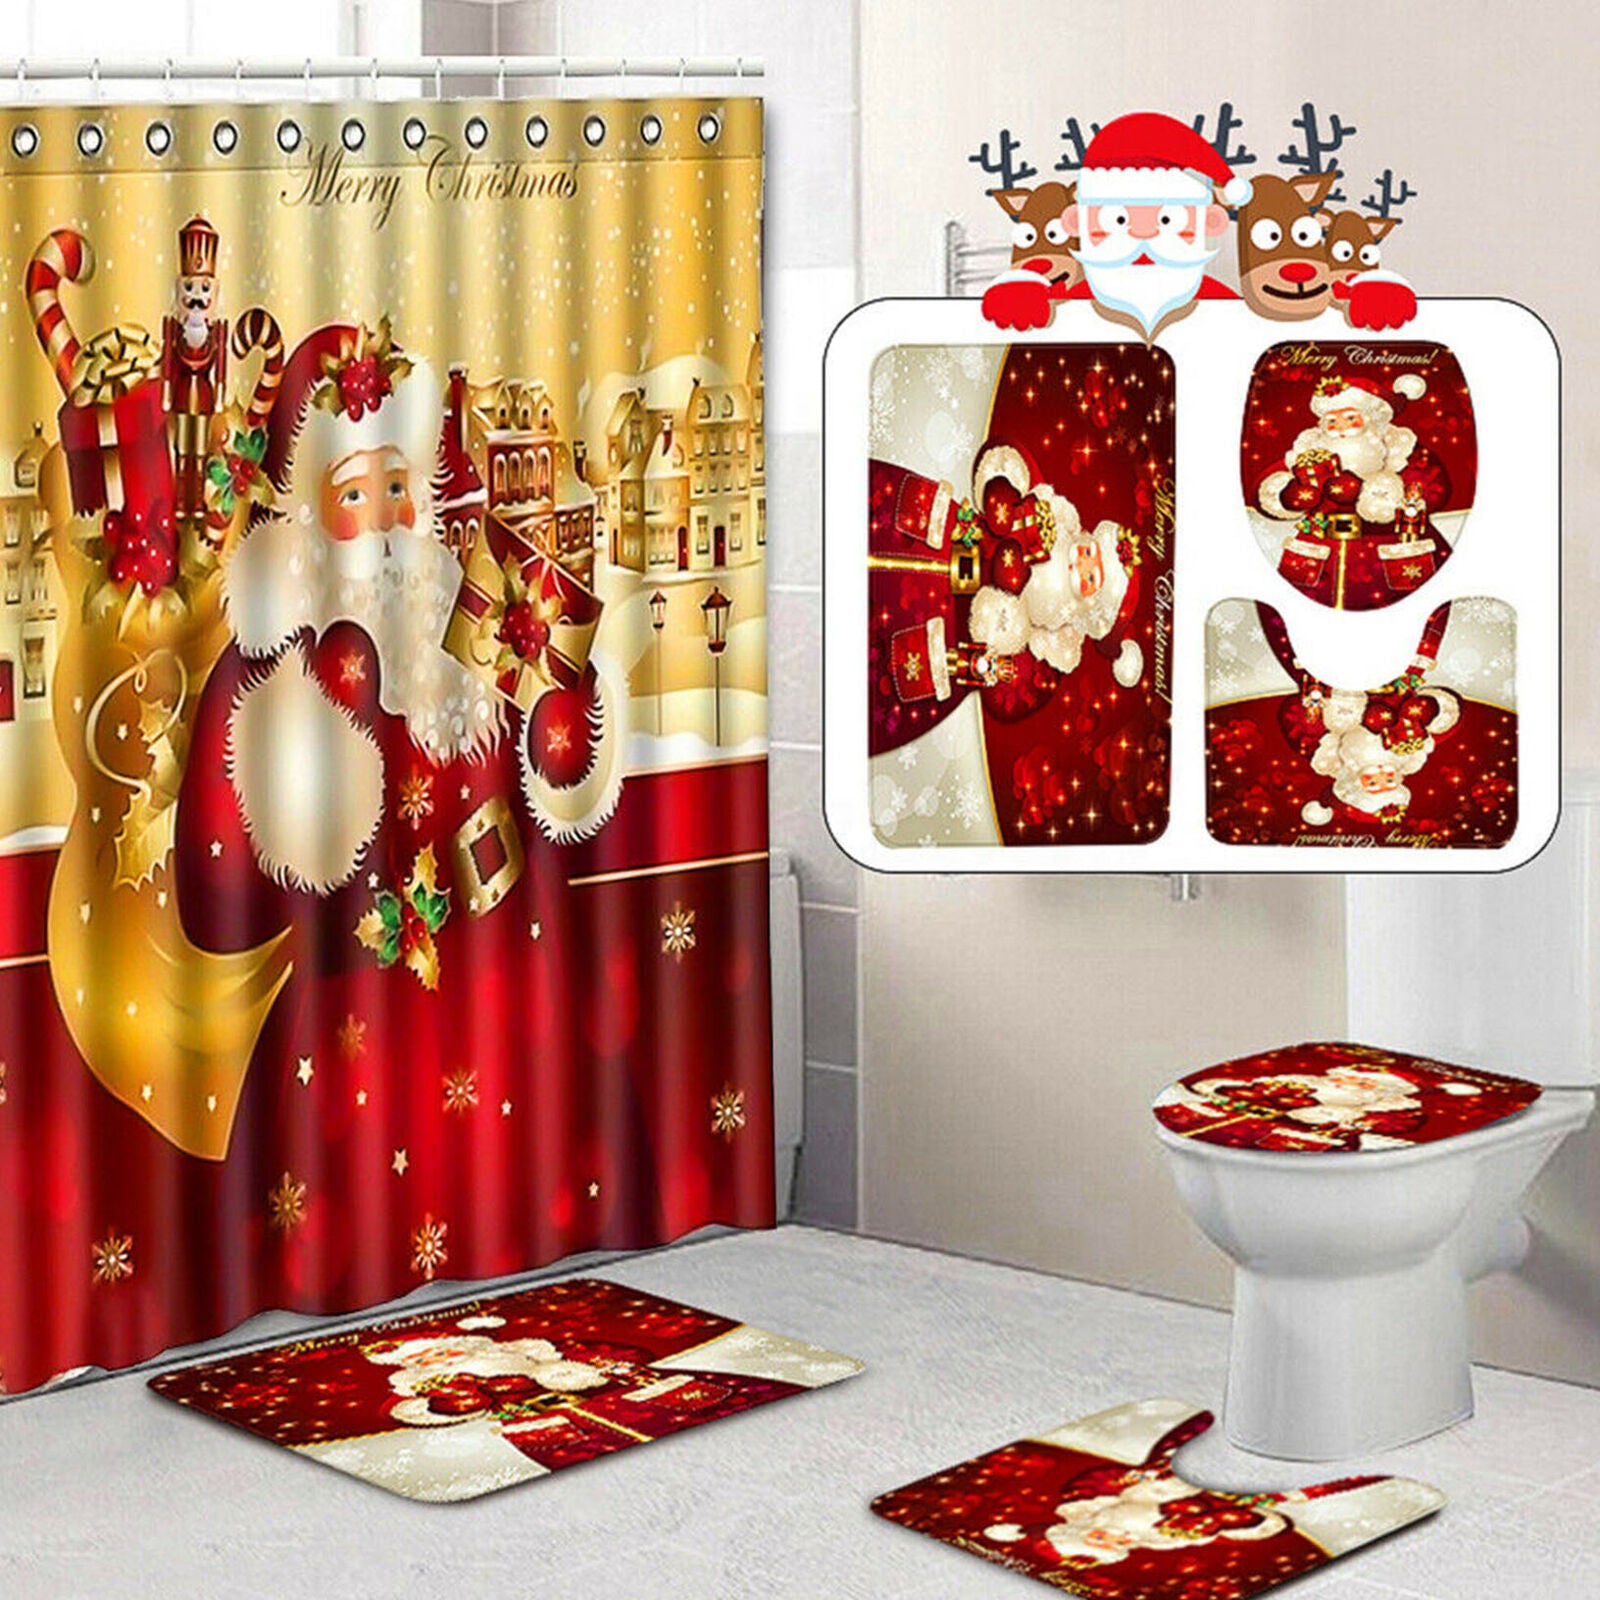 4Pcs Christmas shower Curtain Bathroom Anti-slip Carpet Rug Toilet Cover Mat Set